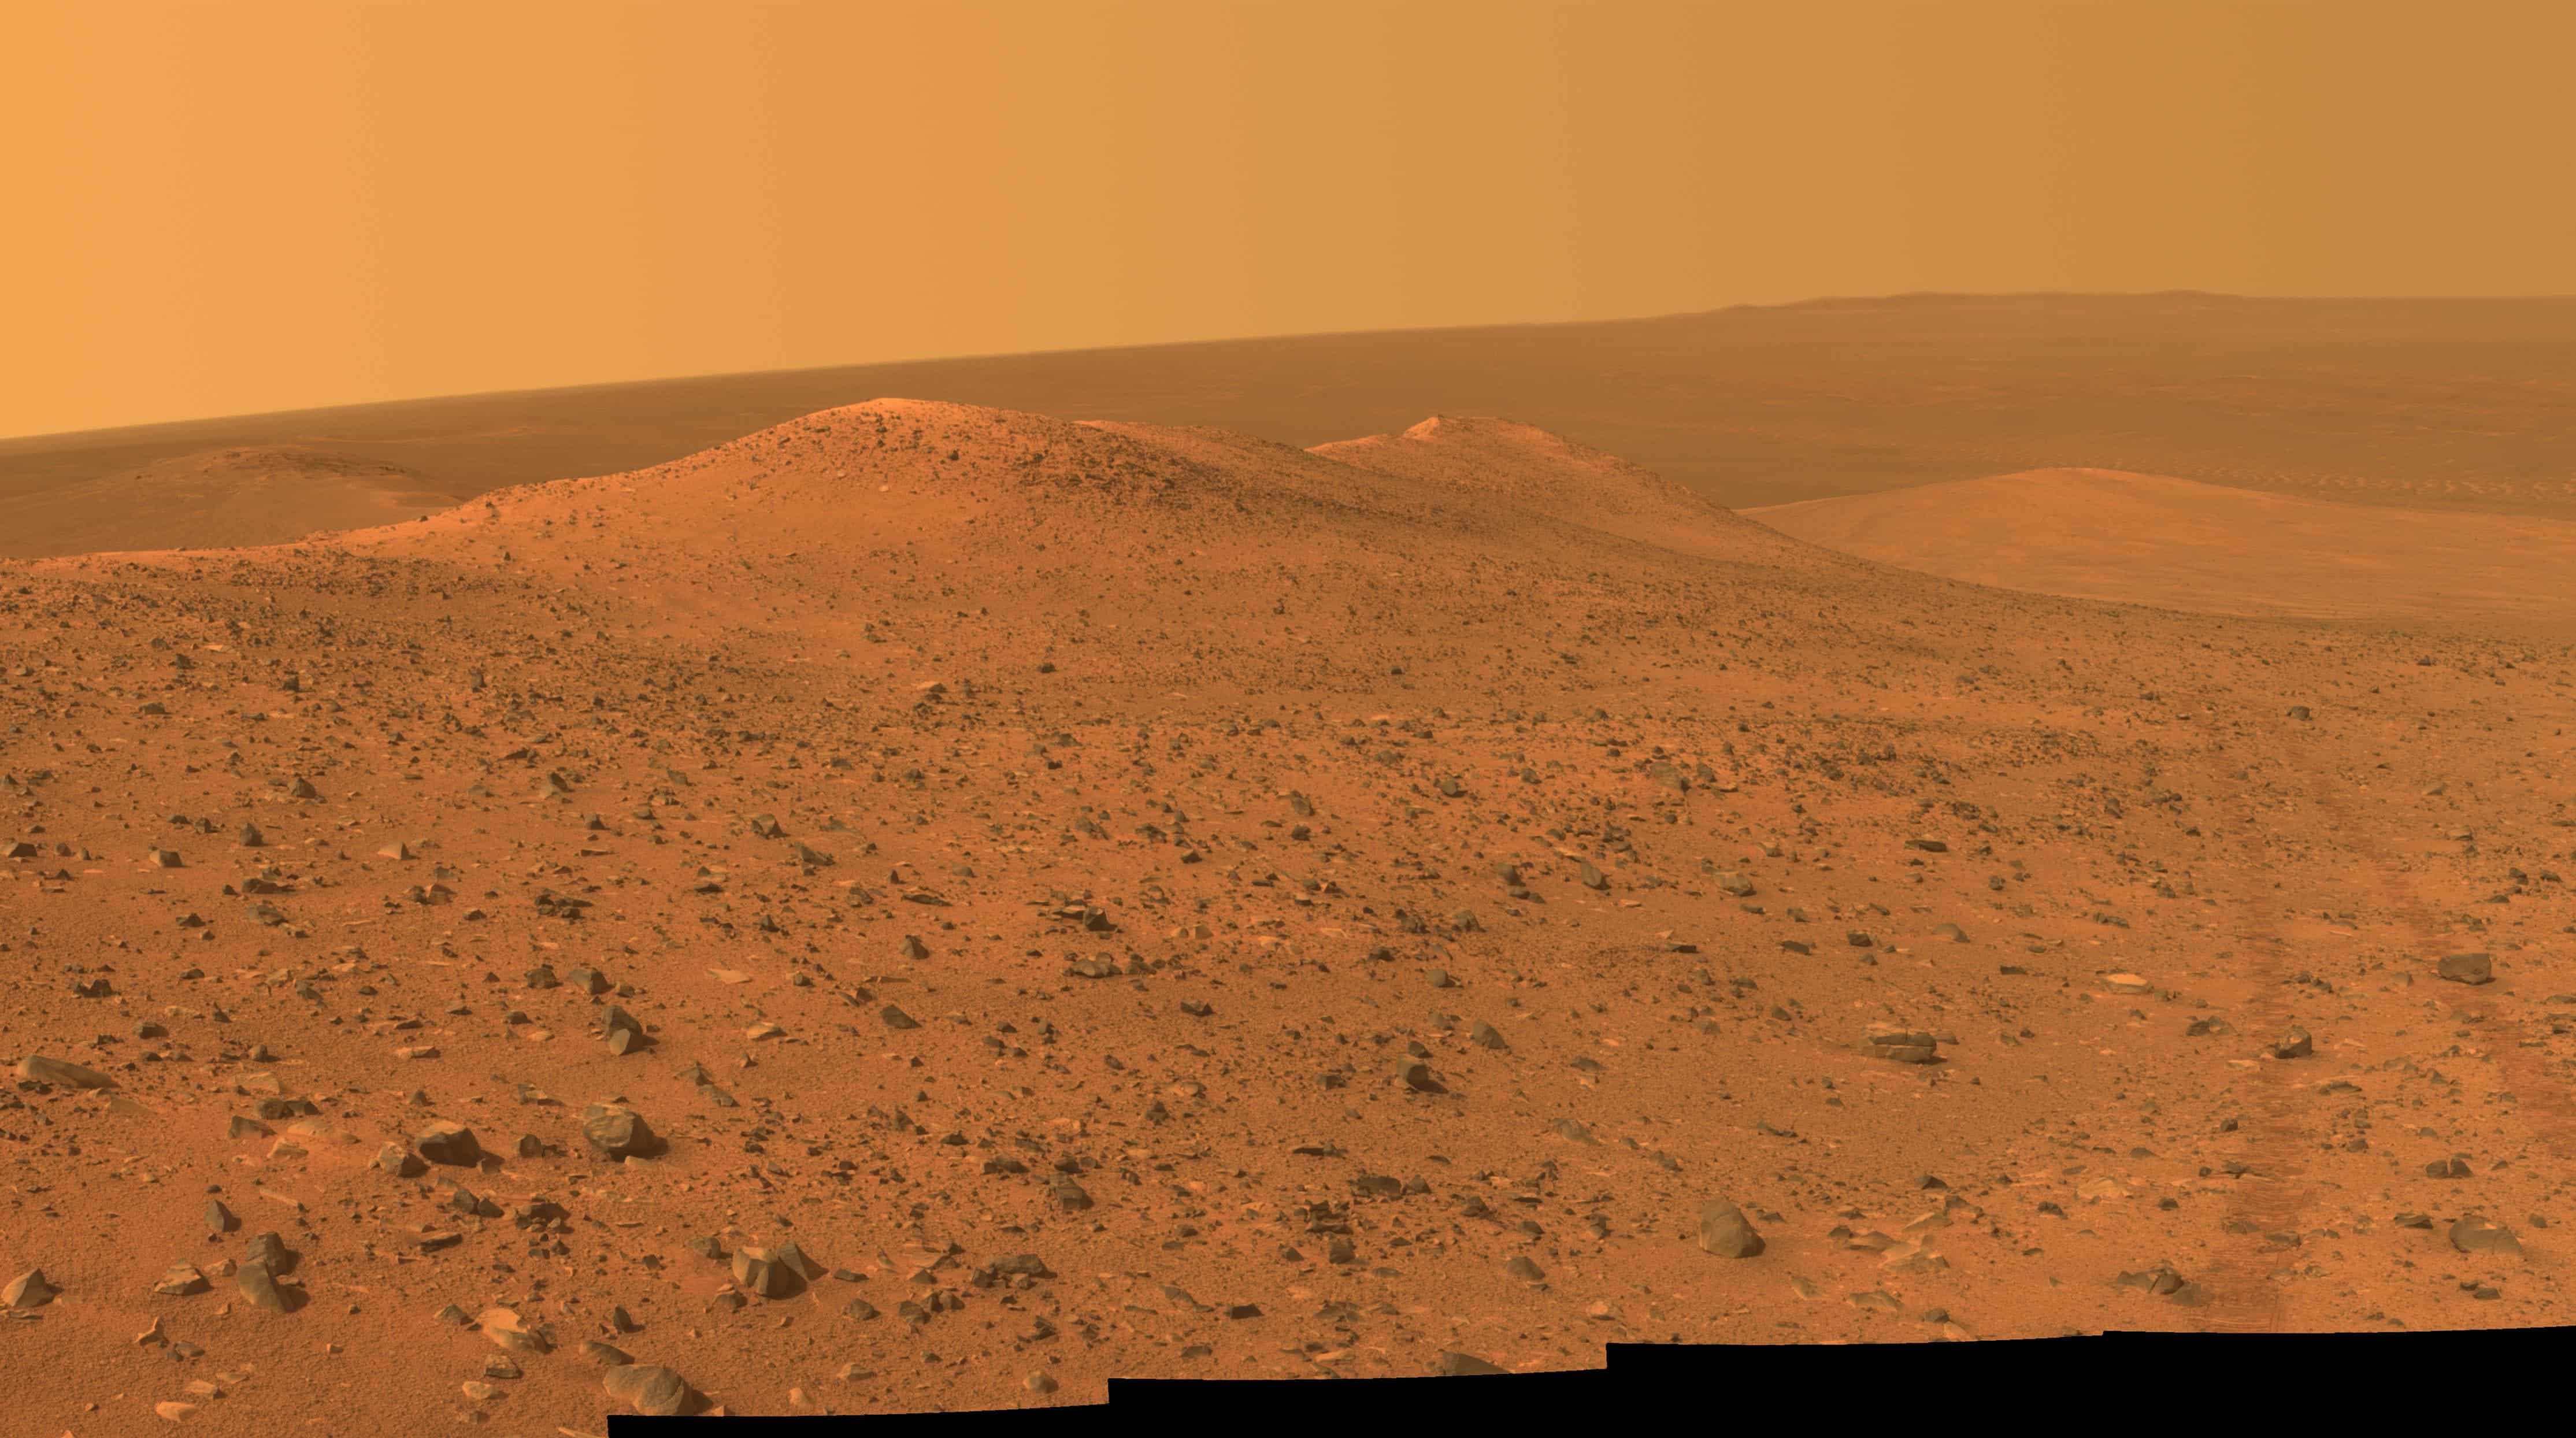 How the surface of Mars looks like. Image credits: NASA / JPL.